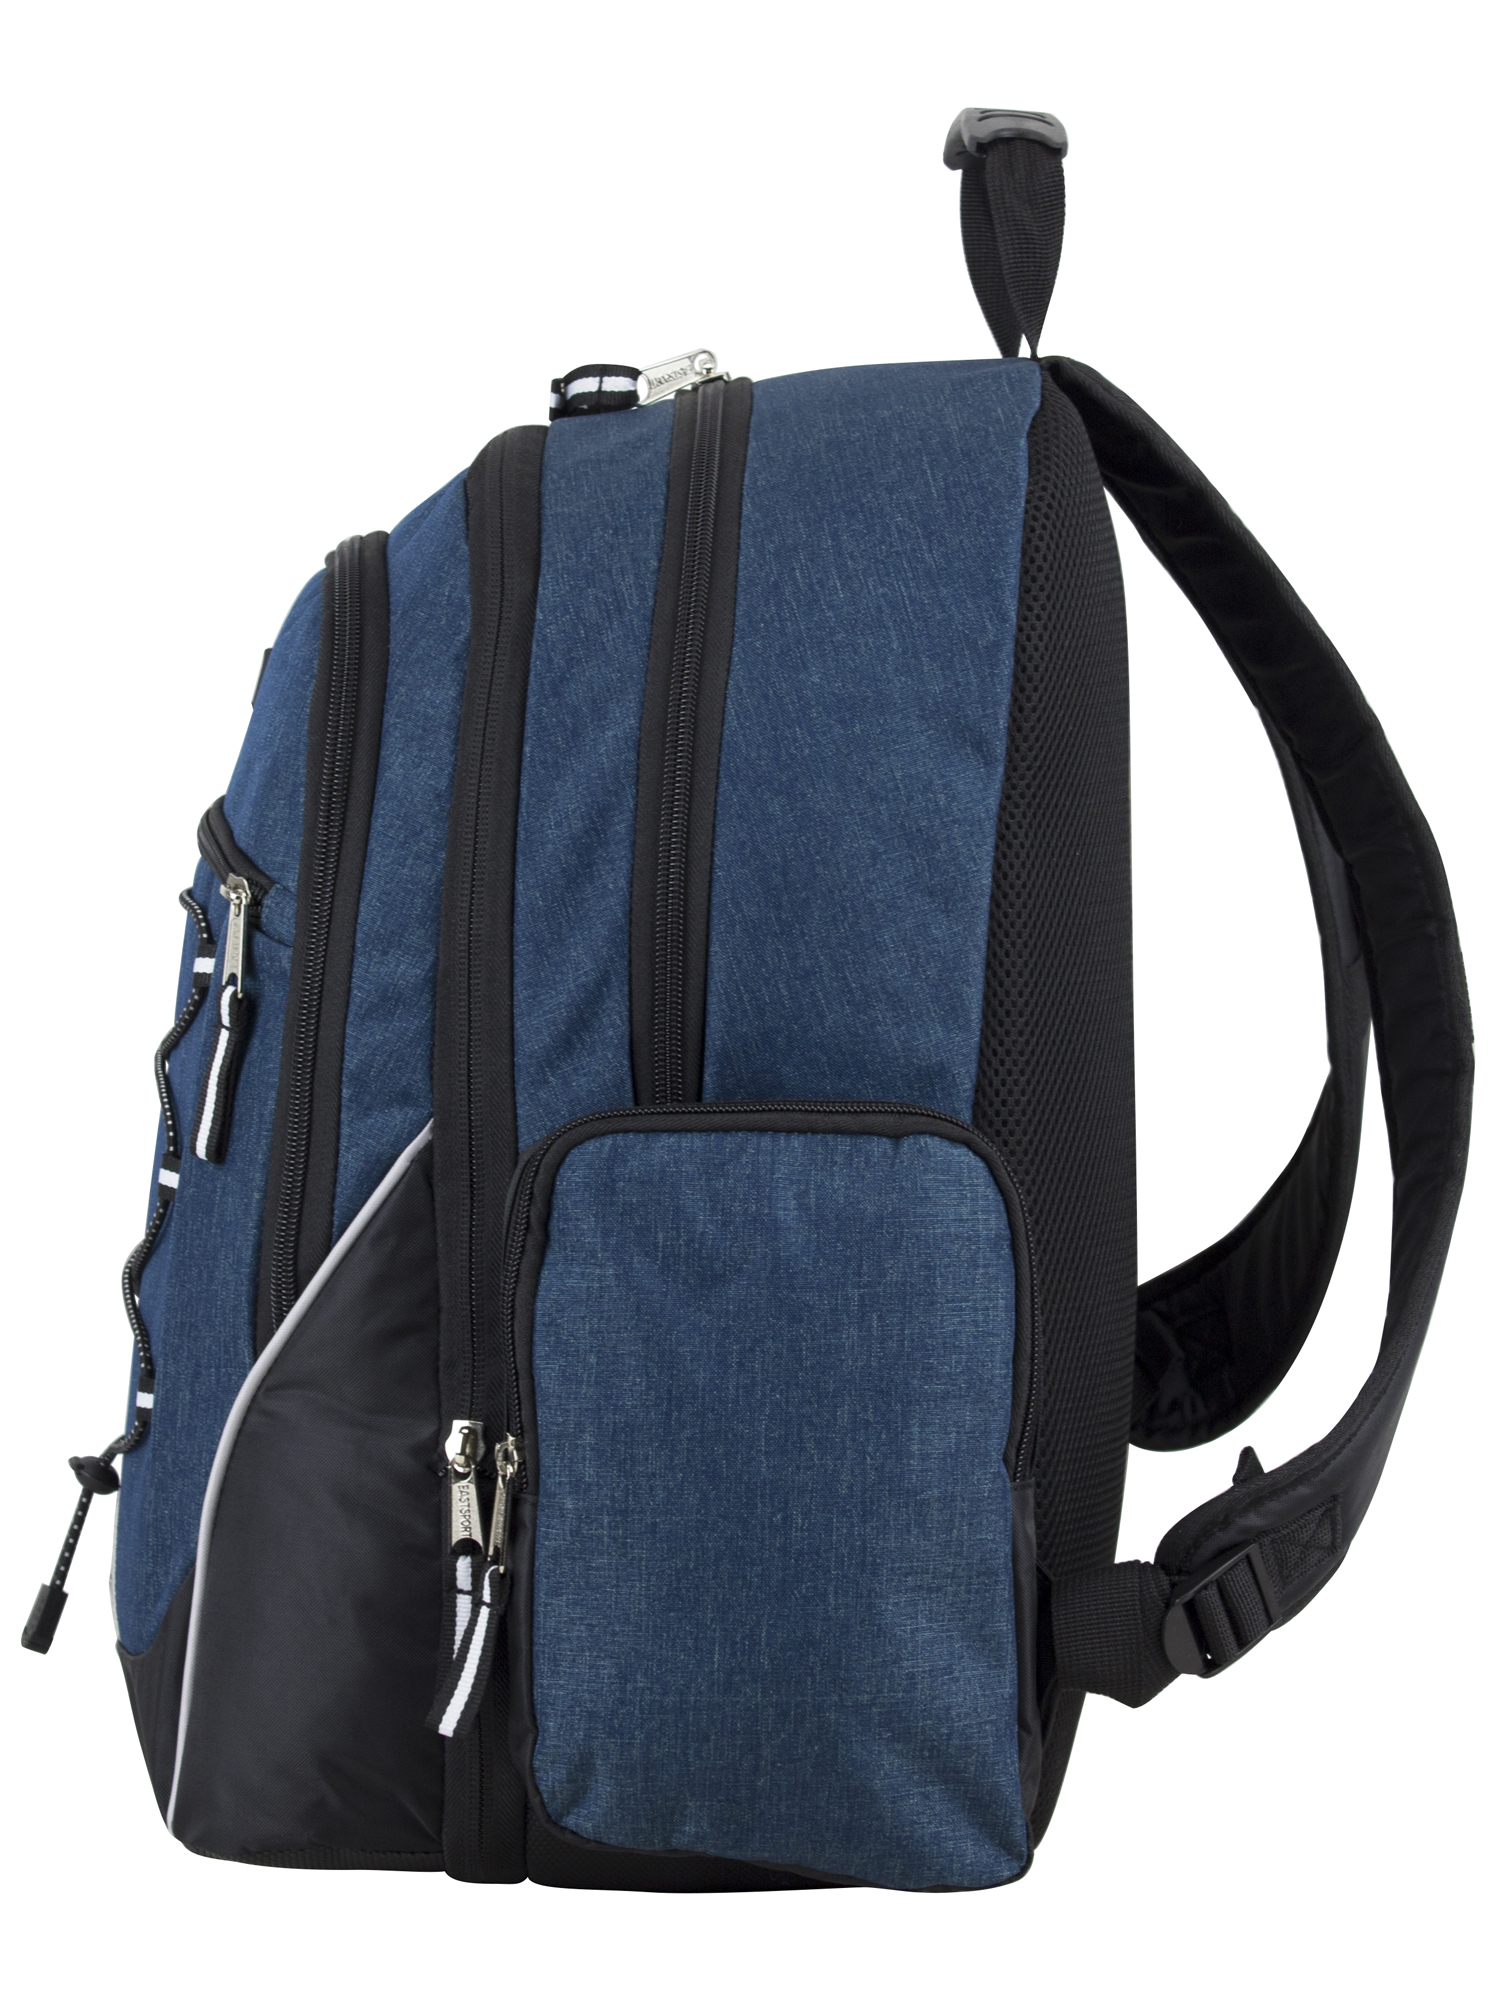 Eastsport Optimus Backpack, Navy - image 2 of 8